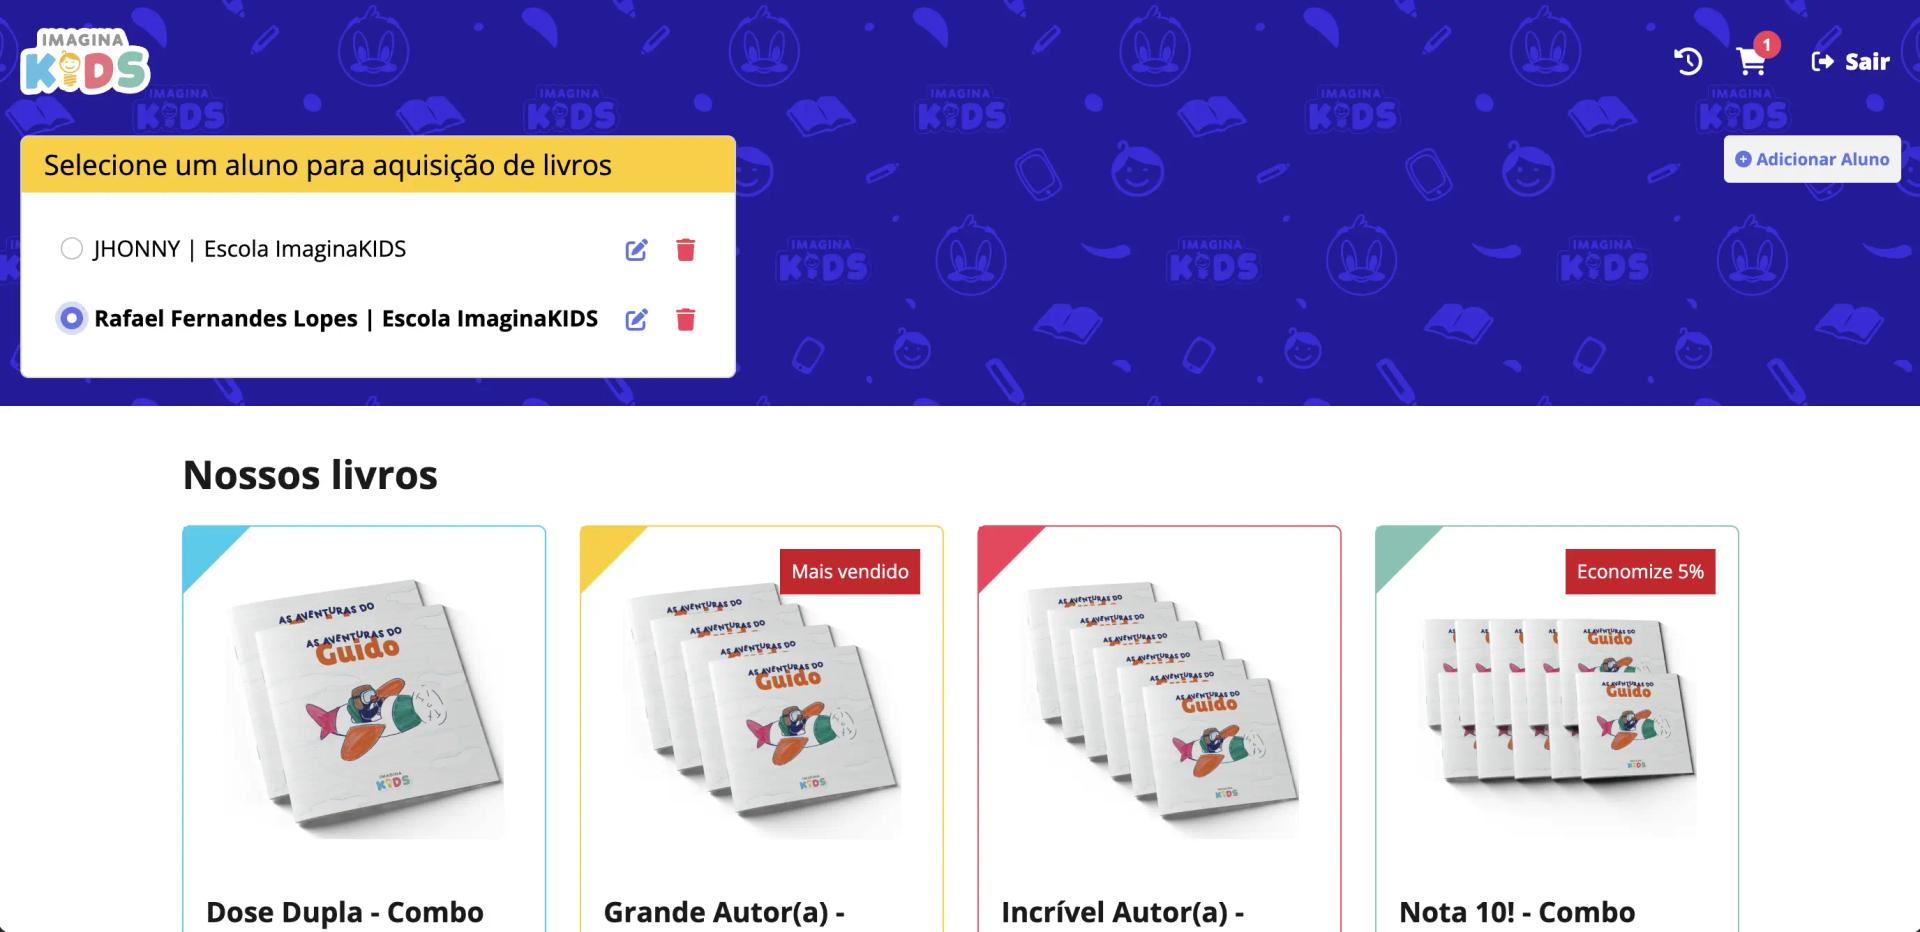 ImaginaShopping main screen containing several book bundles for selling